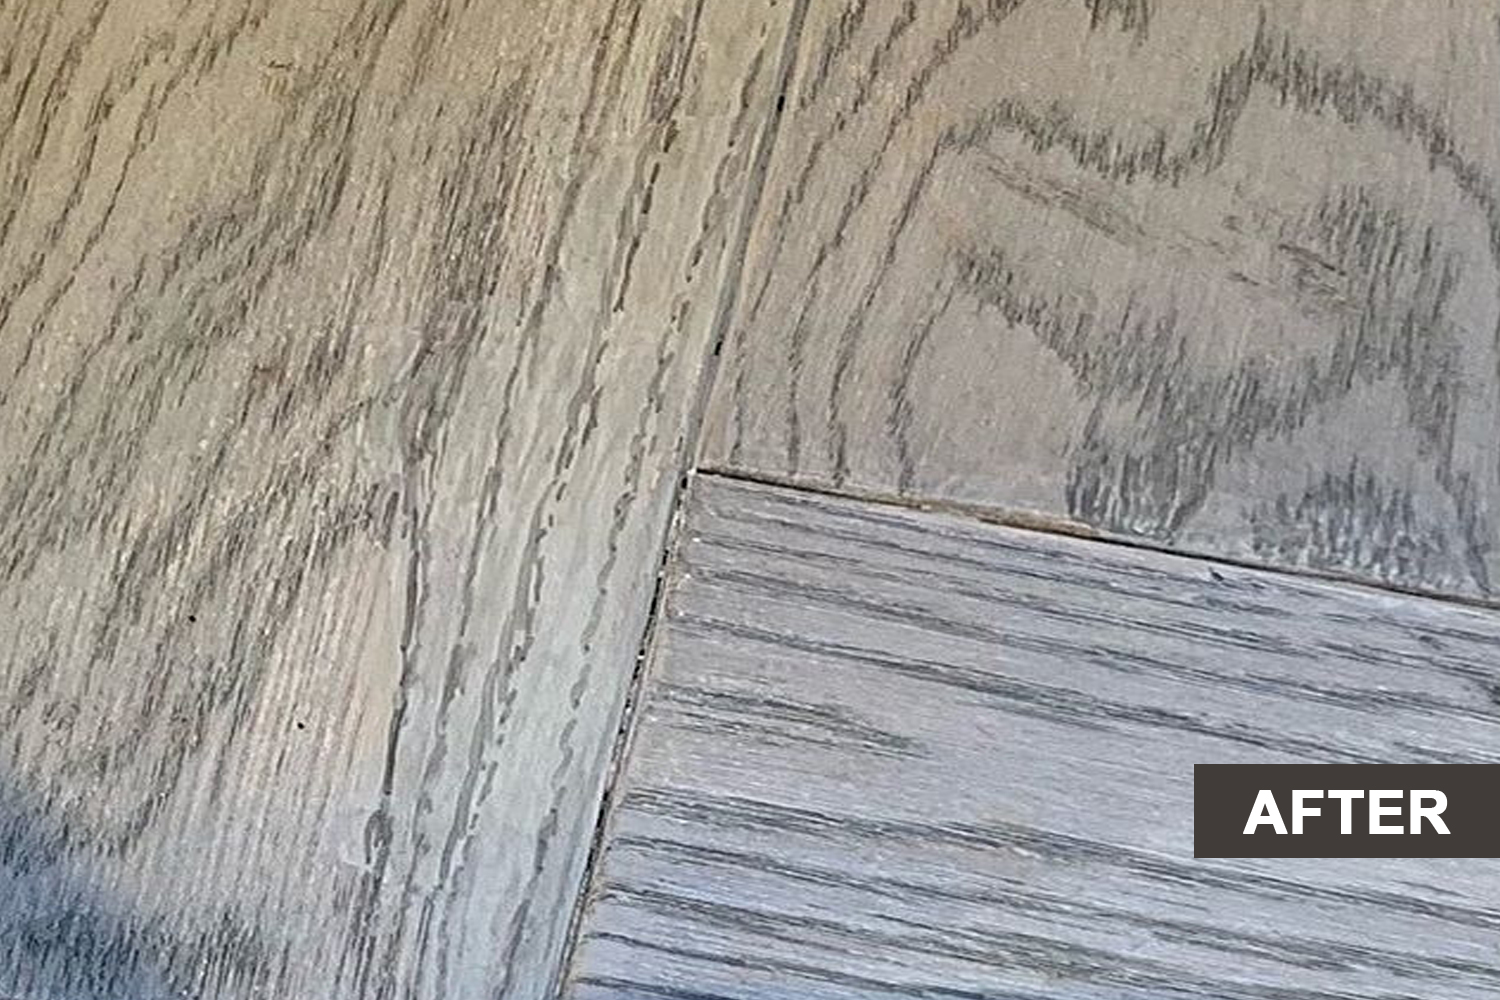 A wood floor after repair